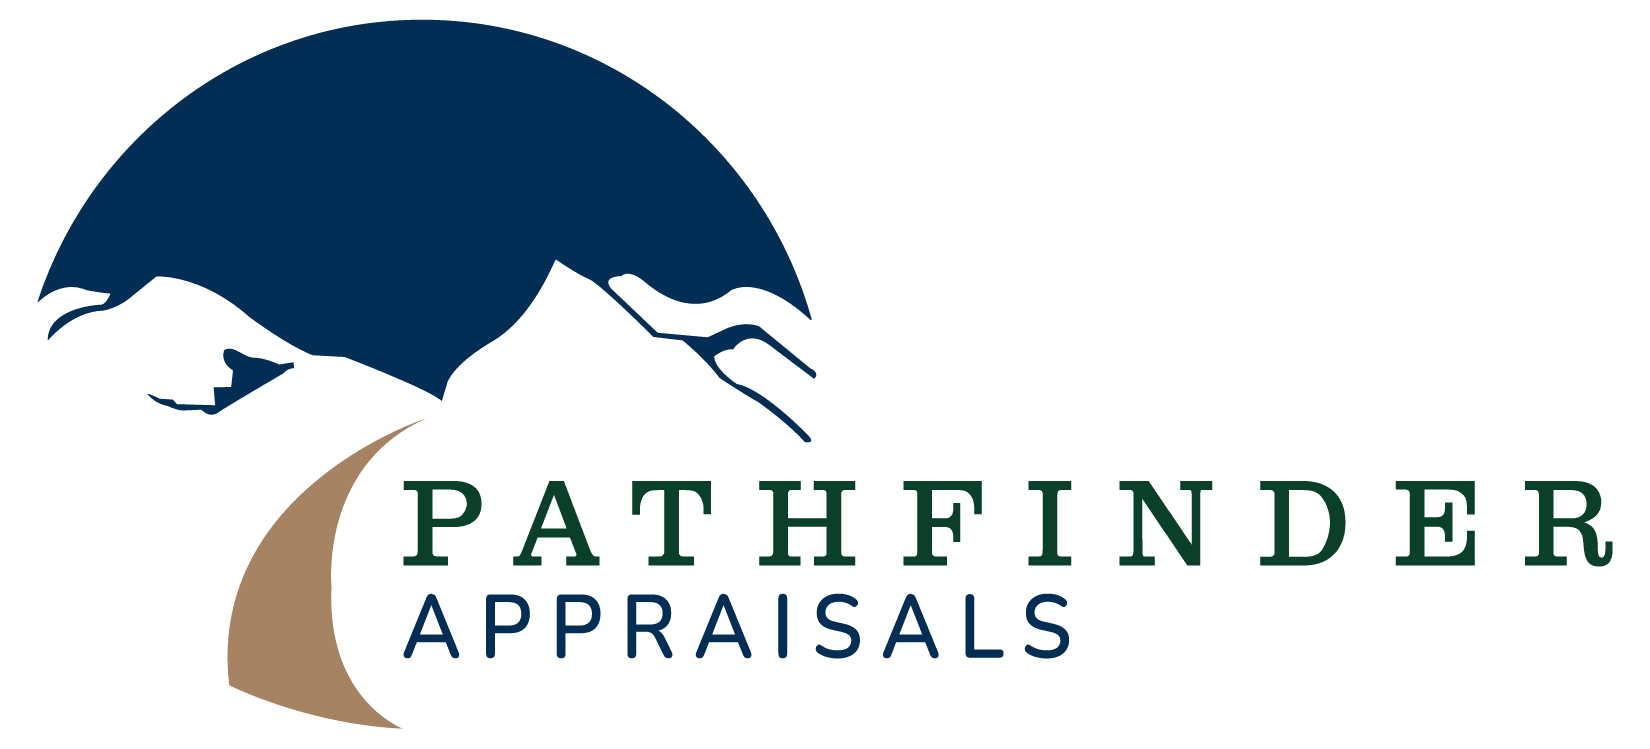 Pathfinder logo by Justin Munn on Dribbble